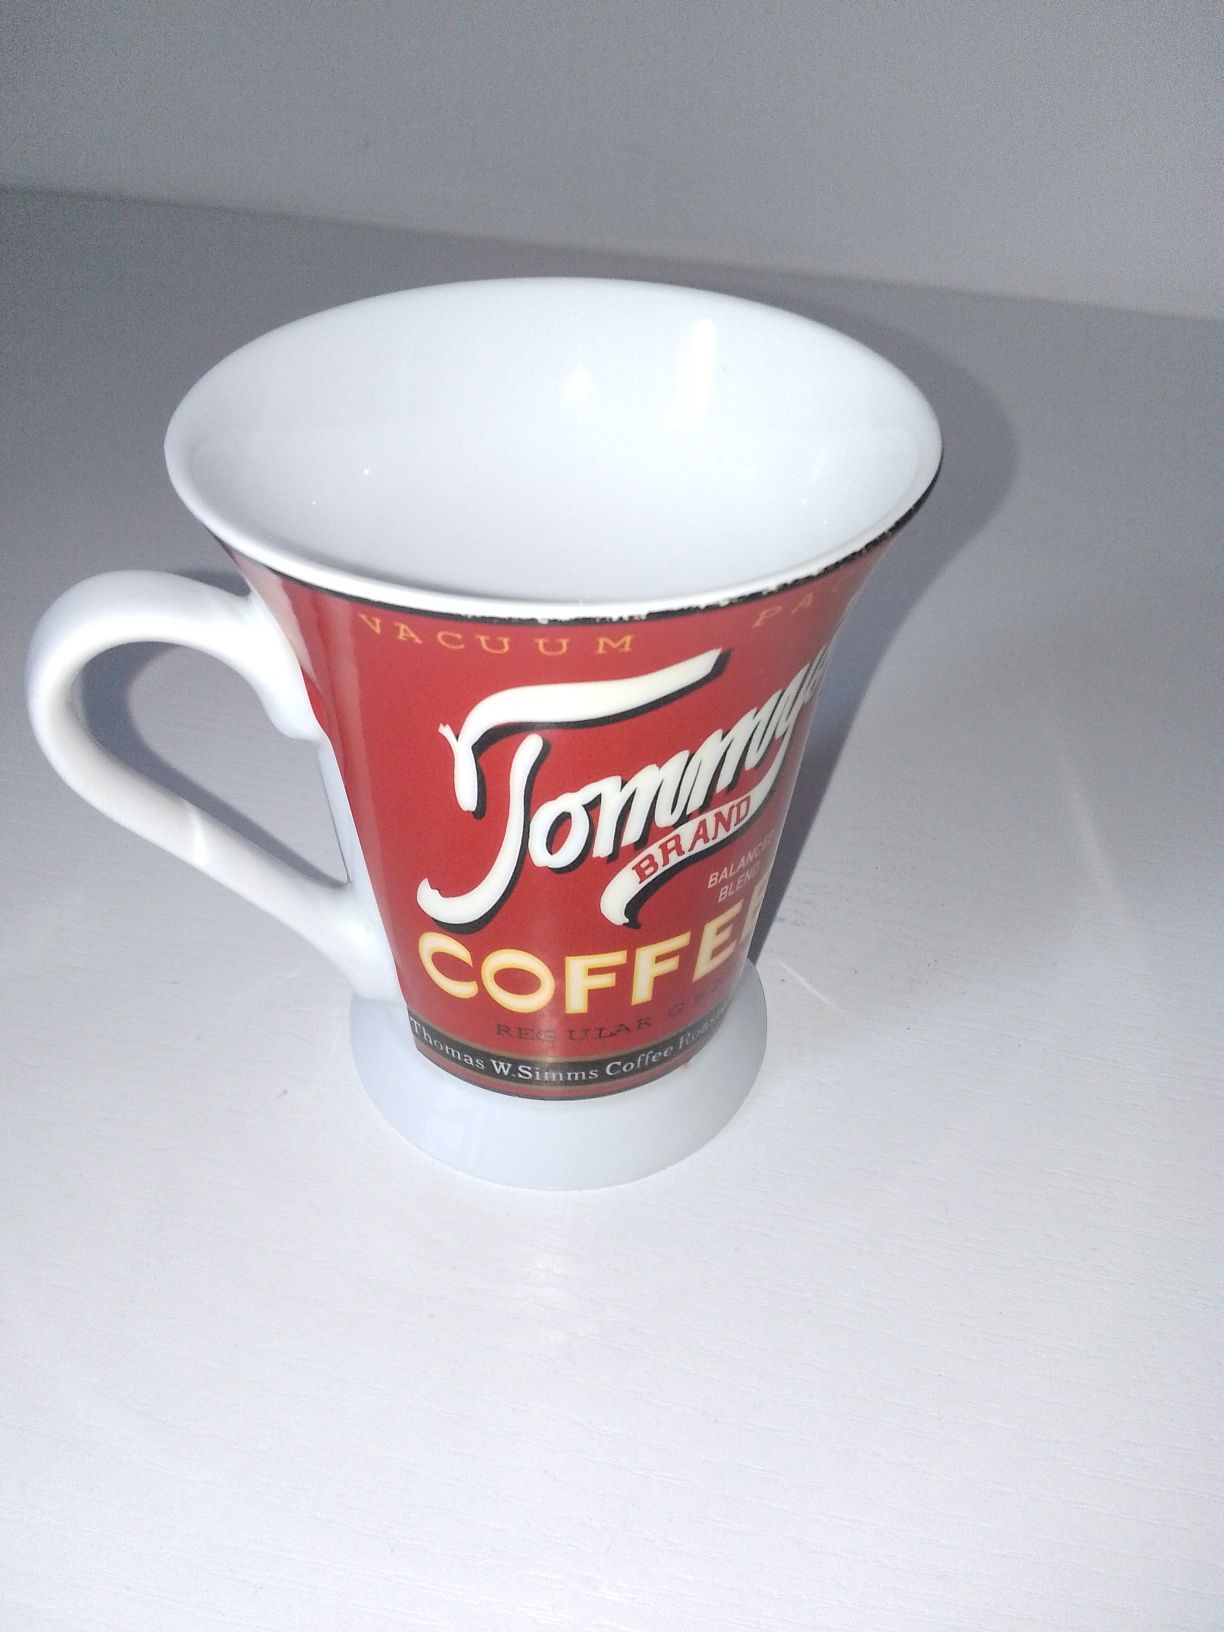 Tommy's Brand Coffee kubek